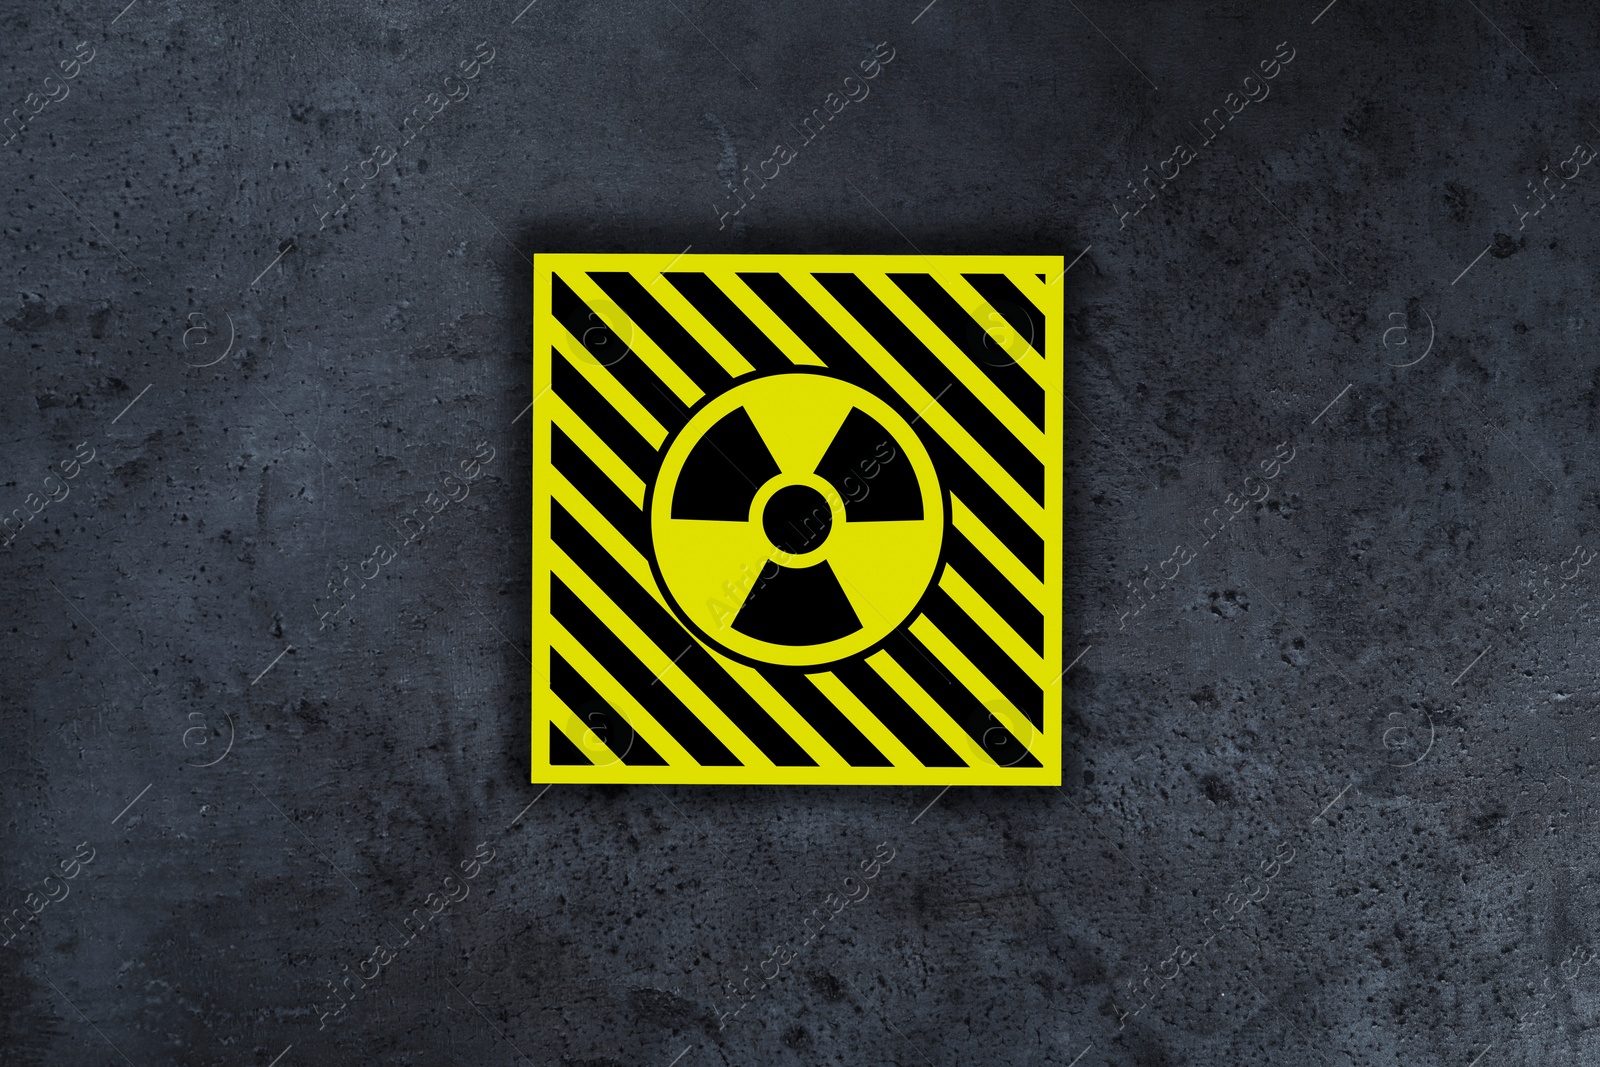 Image of Radioactive sign on grey stone wall. Hazard symbol